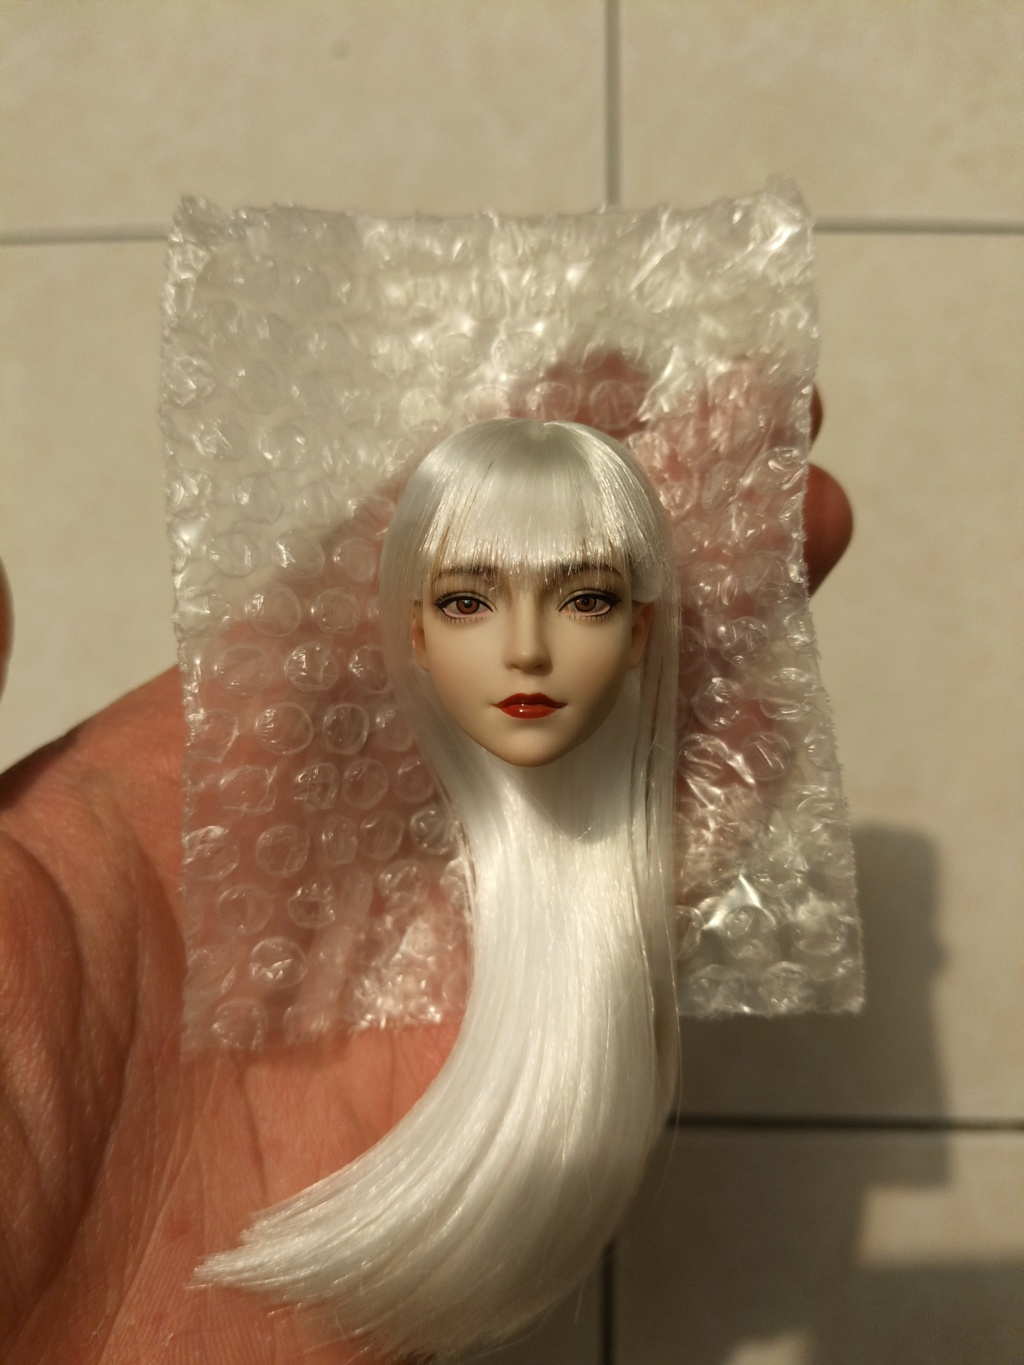 Headsculpt - NEW PRODUCT: LZ TOYS: 1/6 hair transplant female head carving SET013 Mayfair A/B/C/D four hair colors O1cn0137